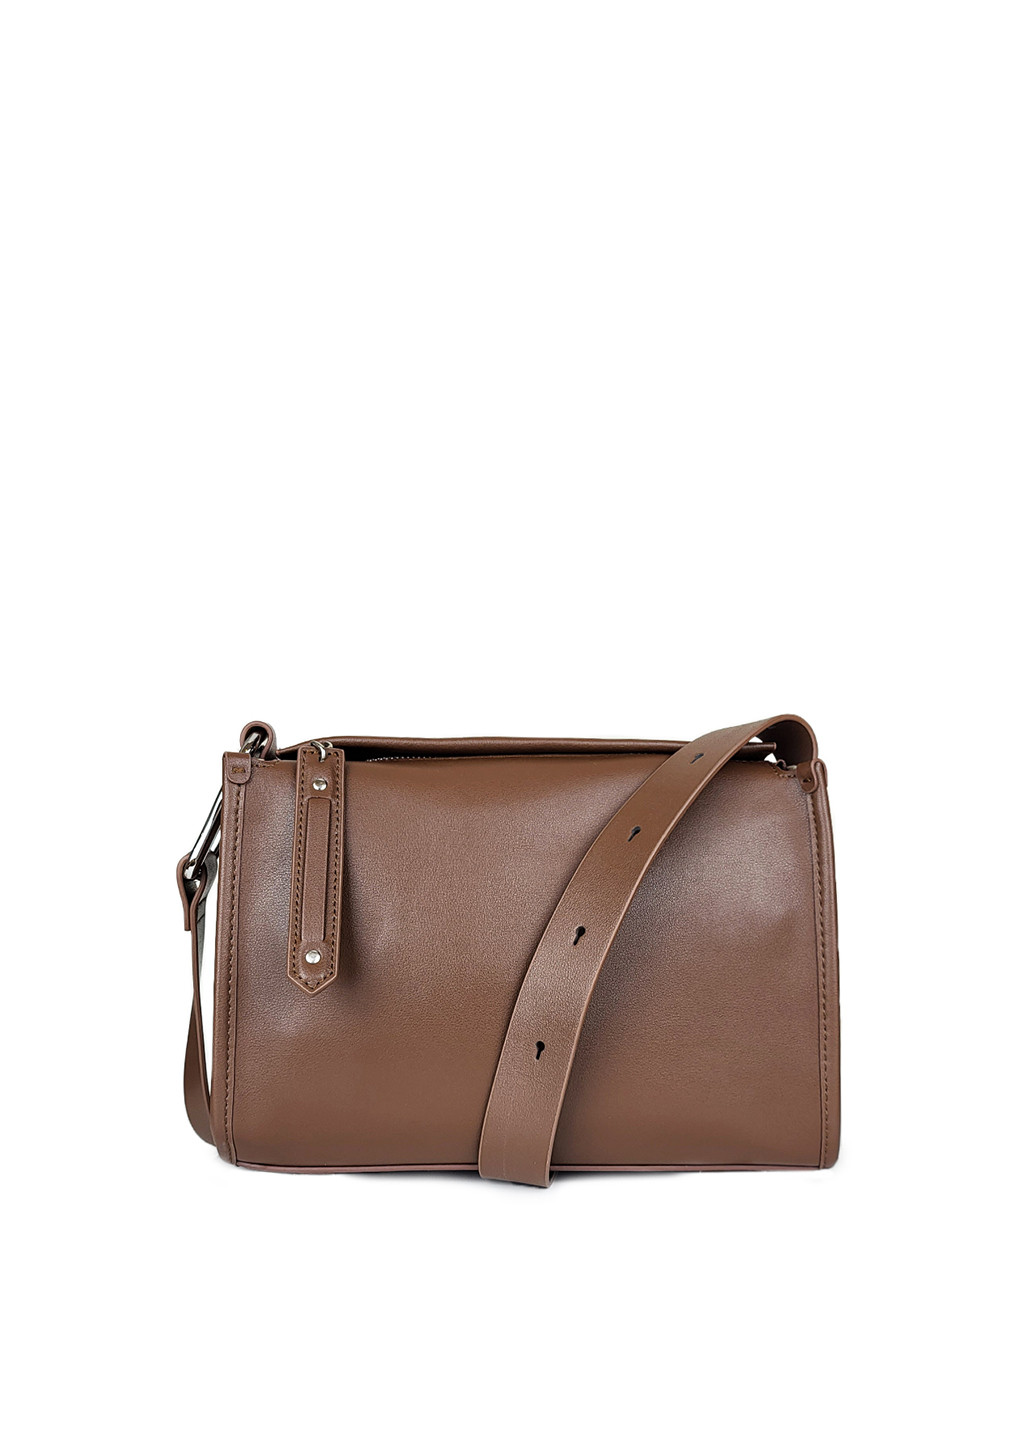 Женская сумка крос-боди коричневая кожа, ZLX-819 кор, Fashion (268120706)